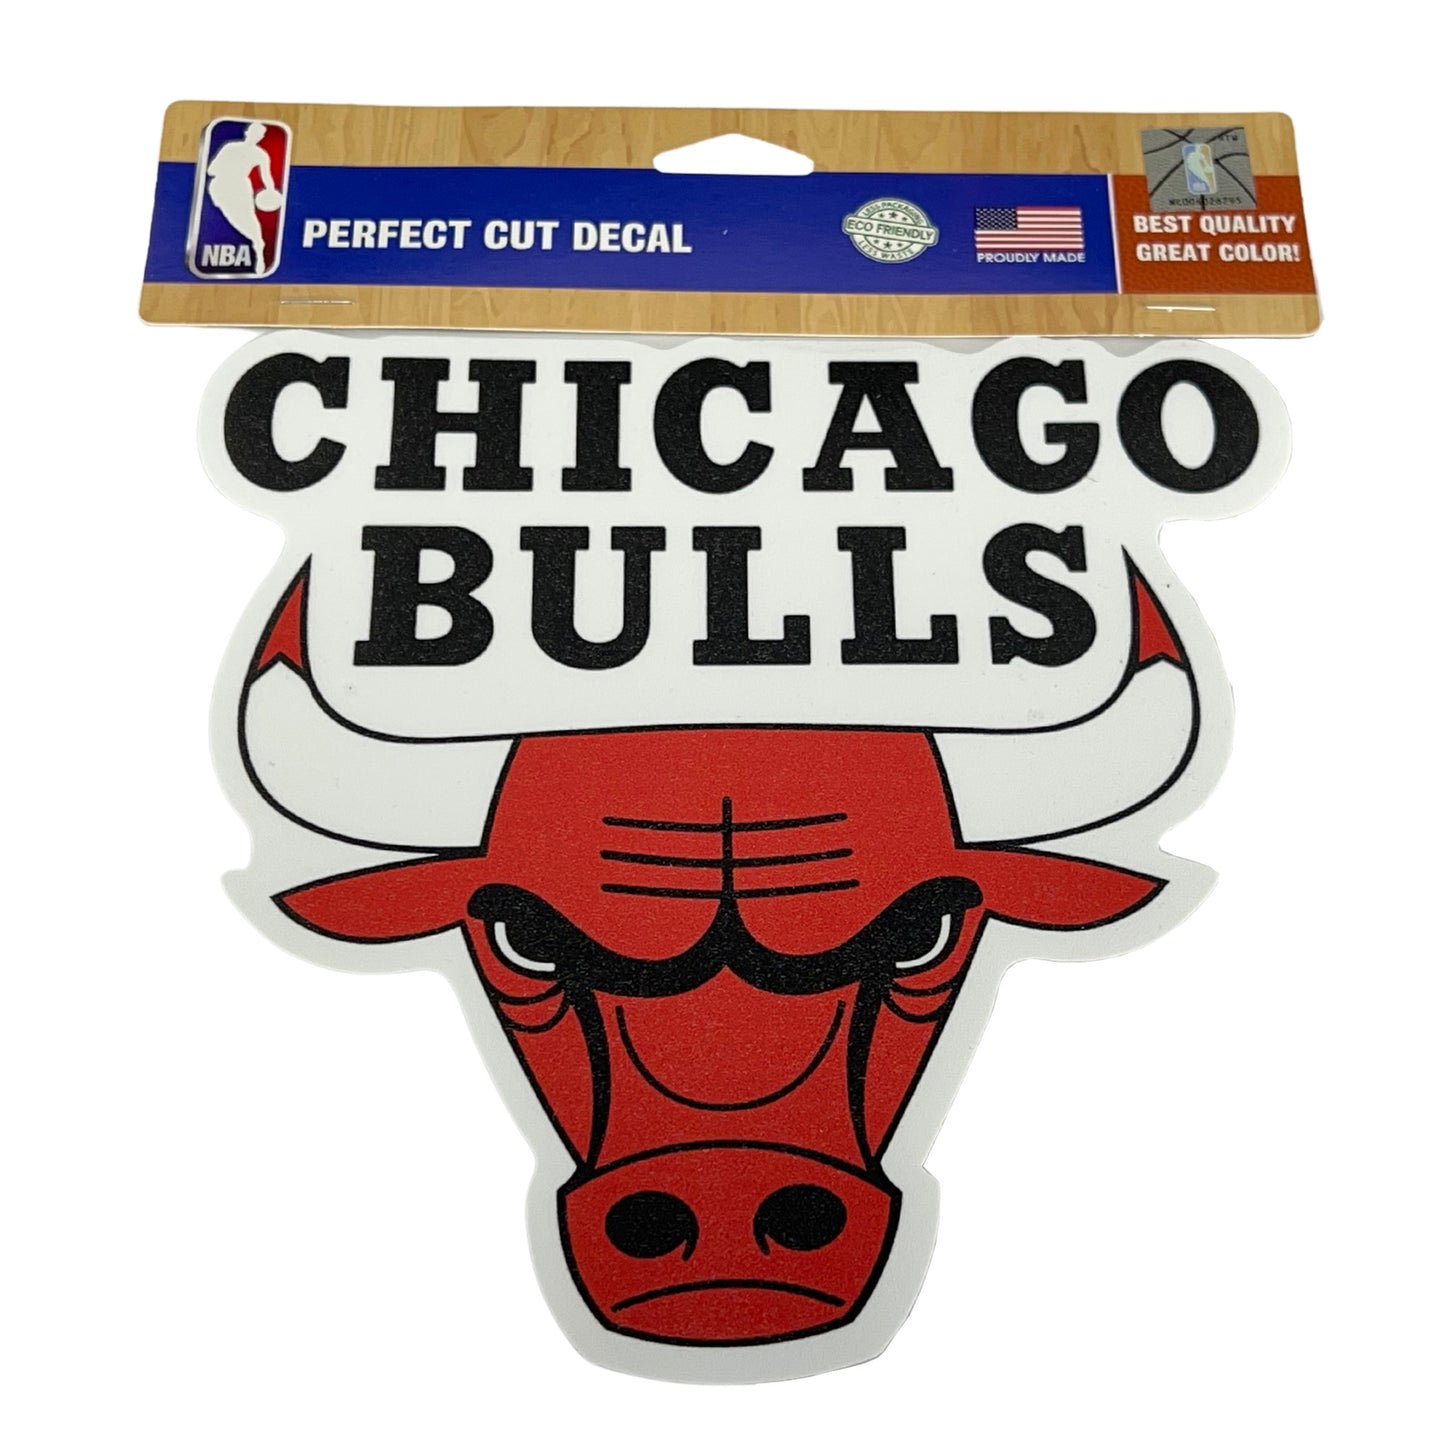 Chicago Bulls 8"x8" Perfect Cut Decal